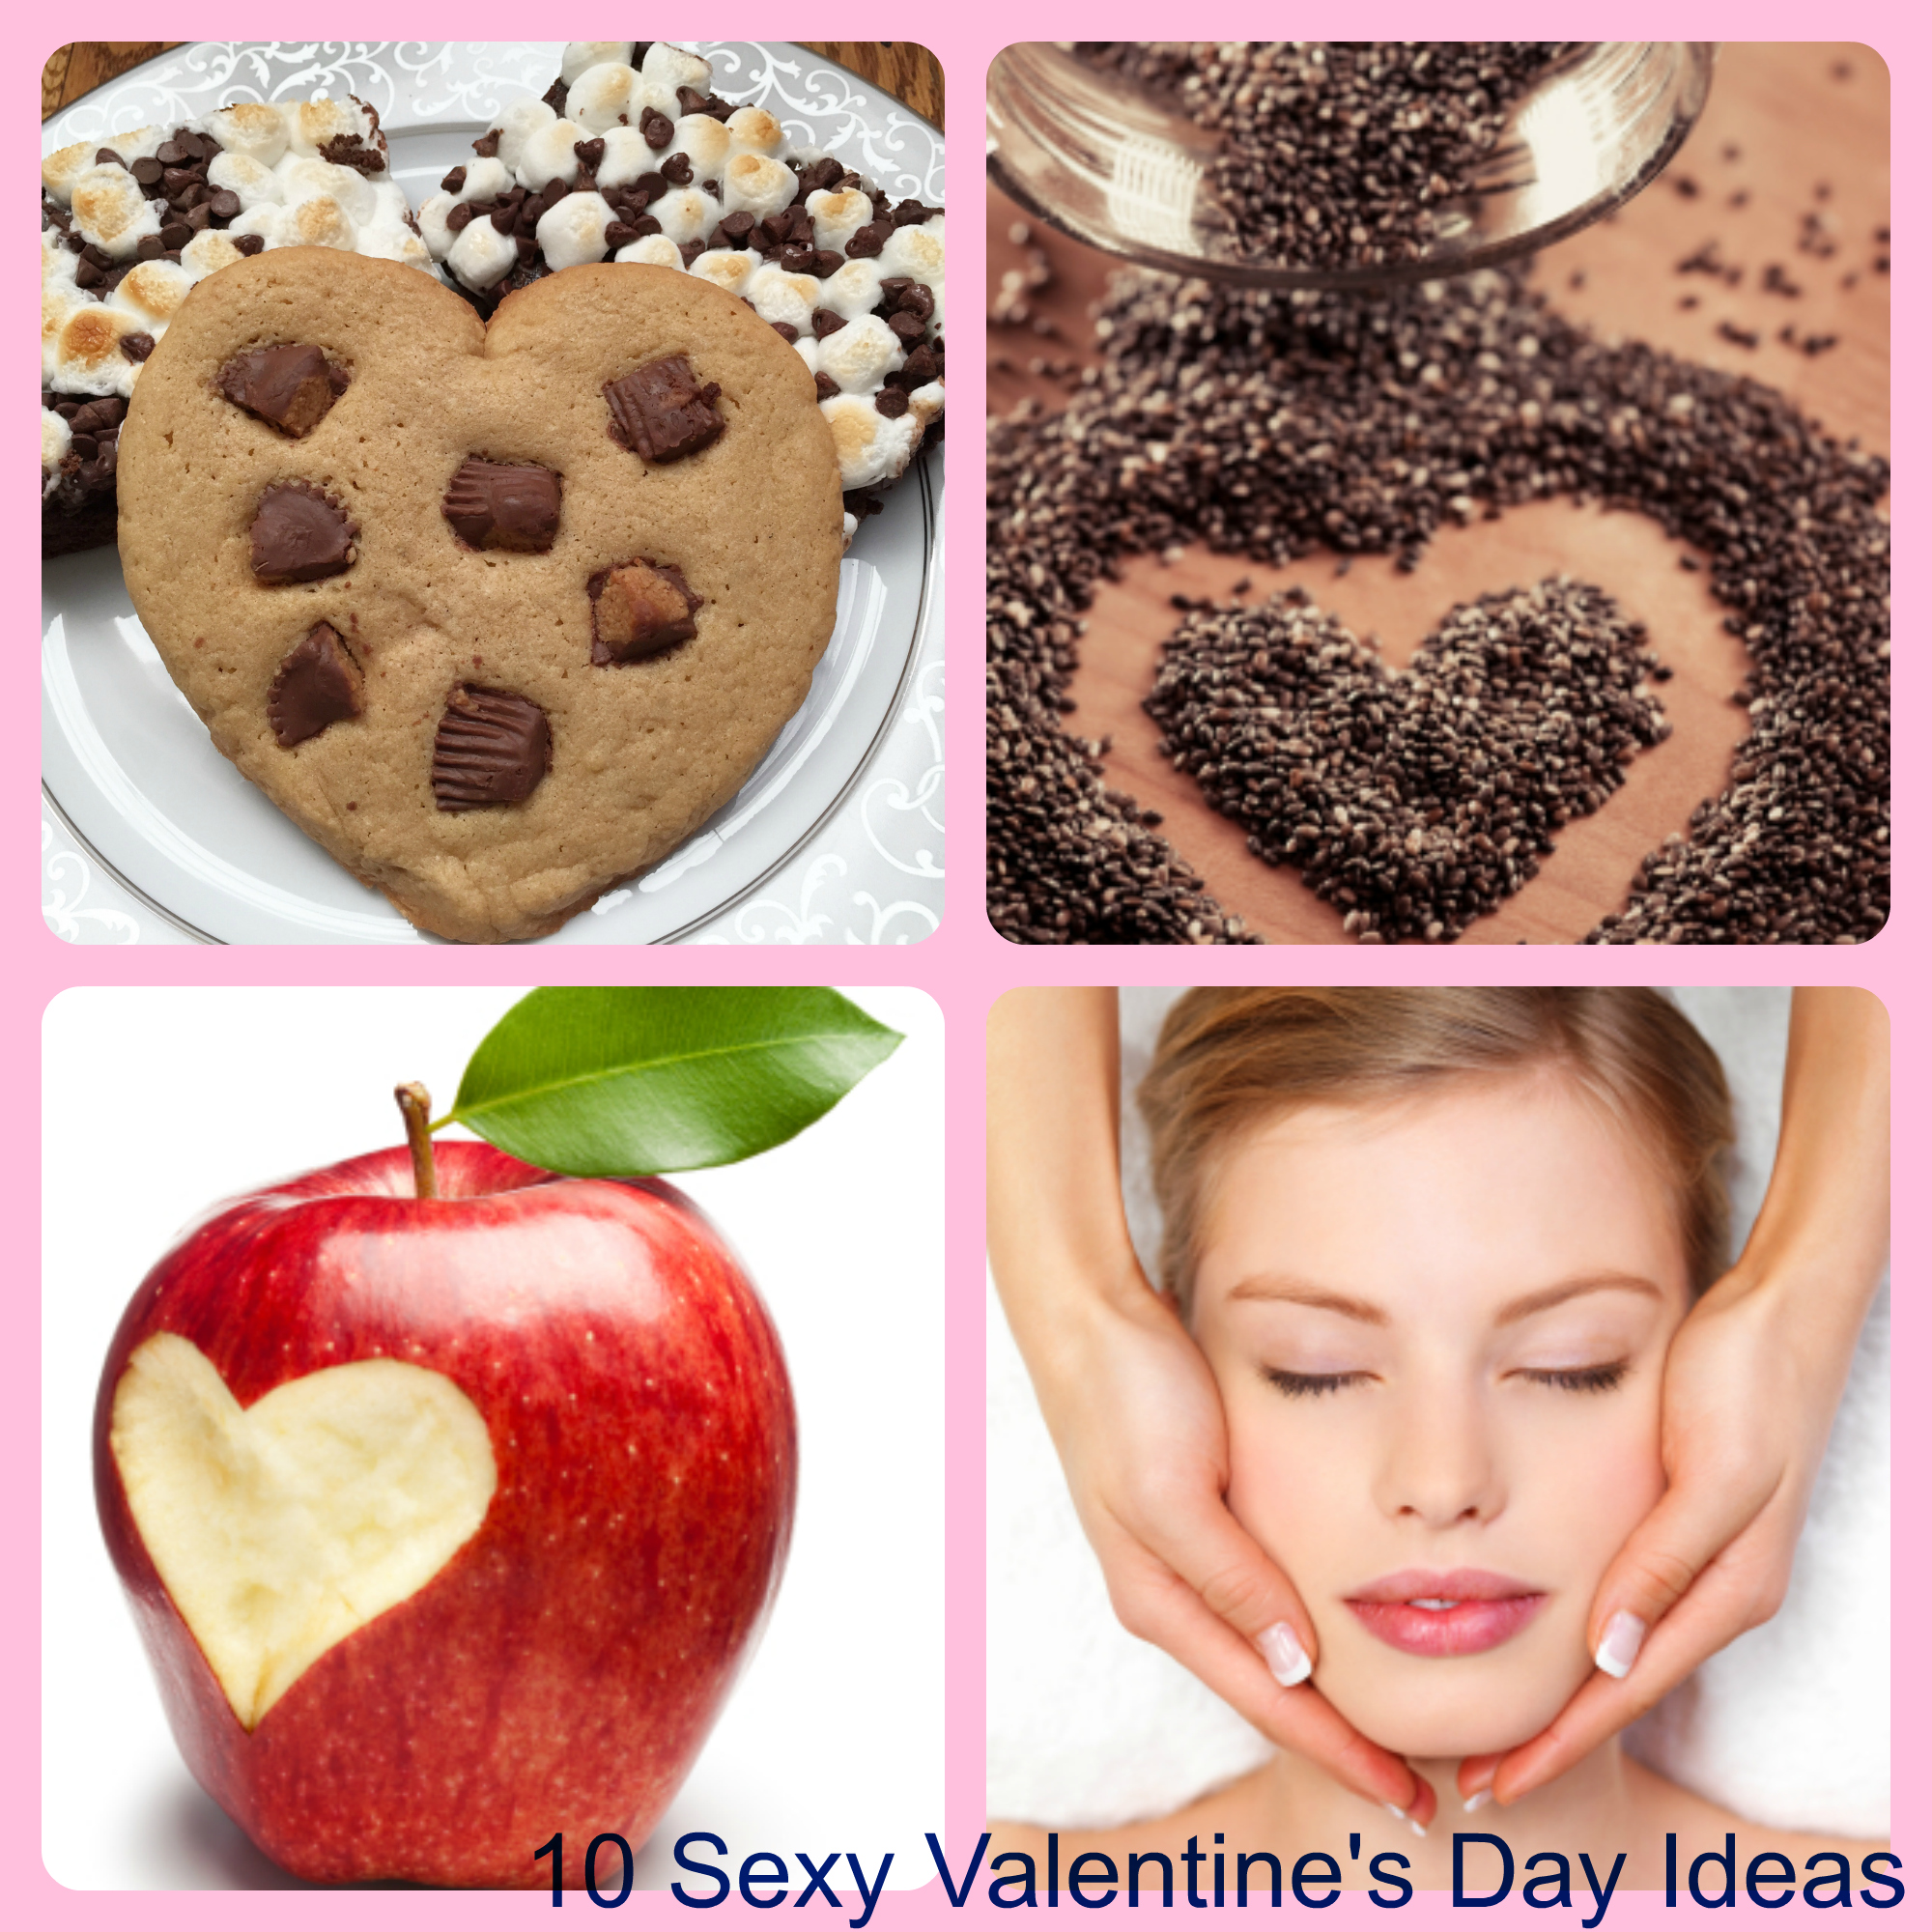 10 Ways To Have A Sexy Valentine's